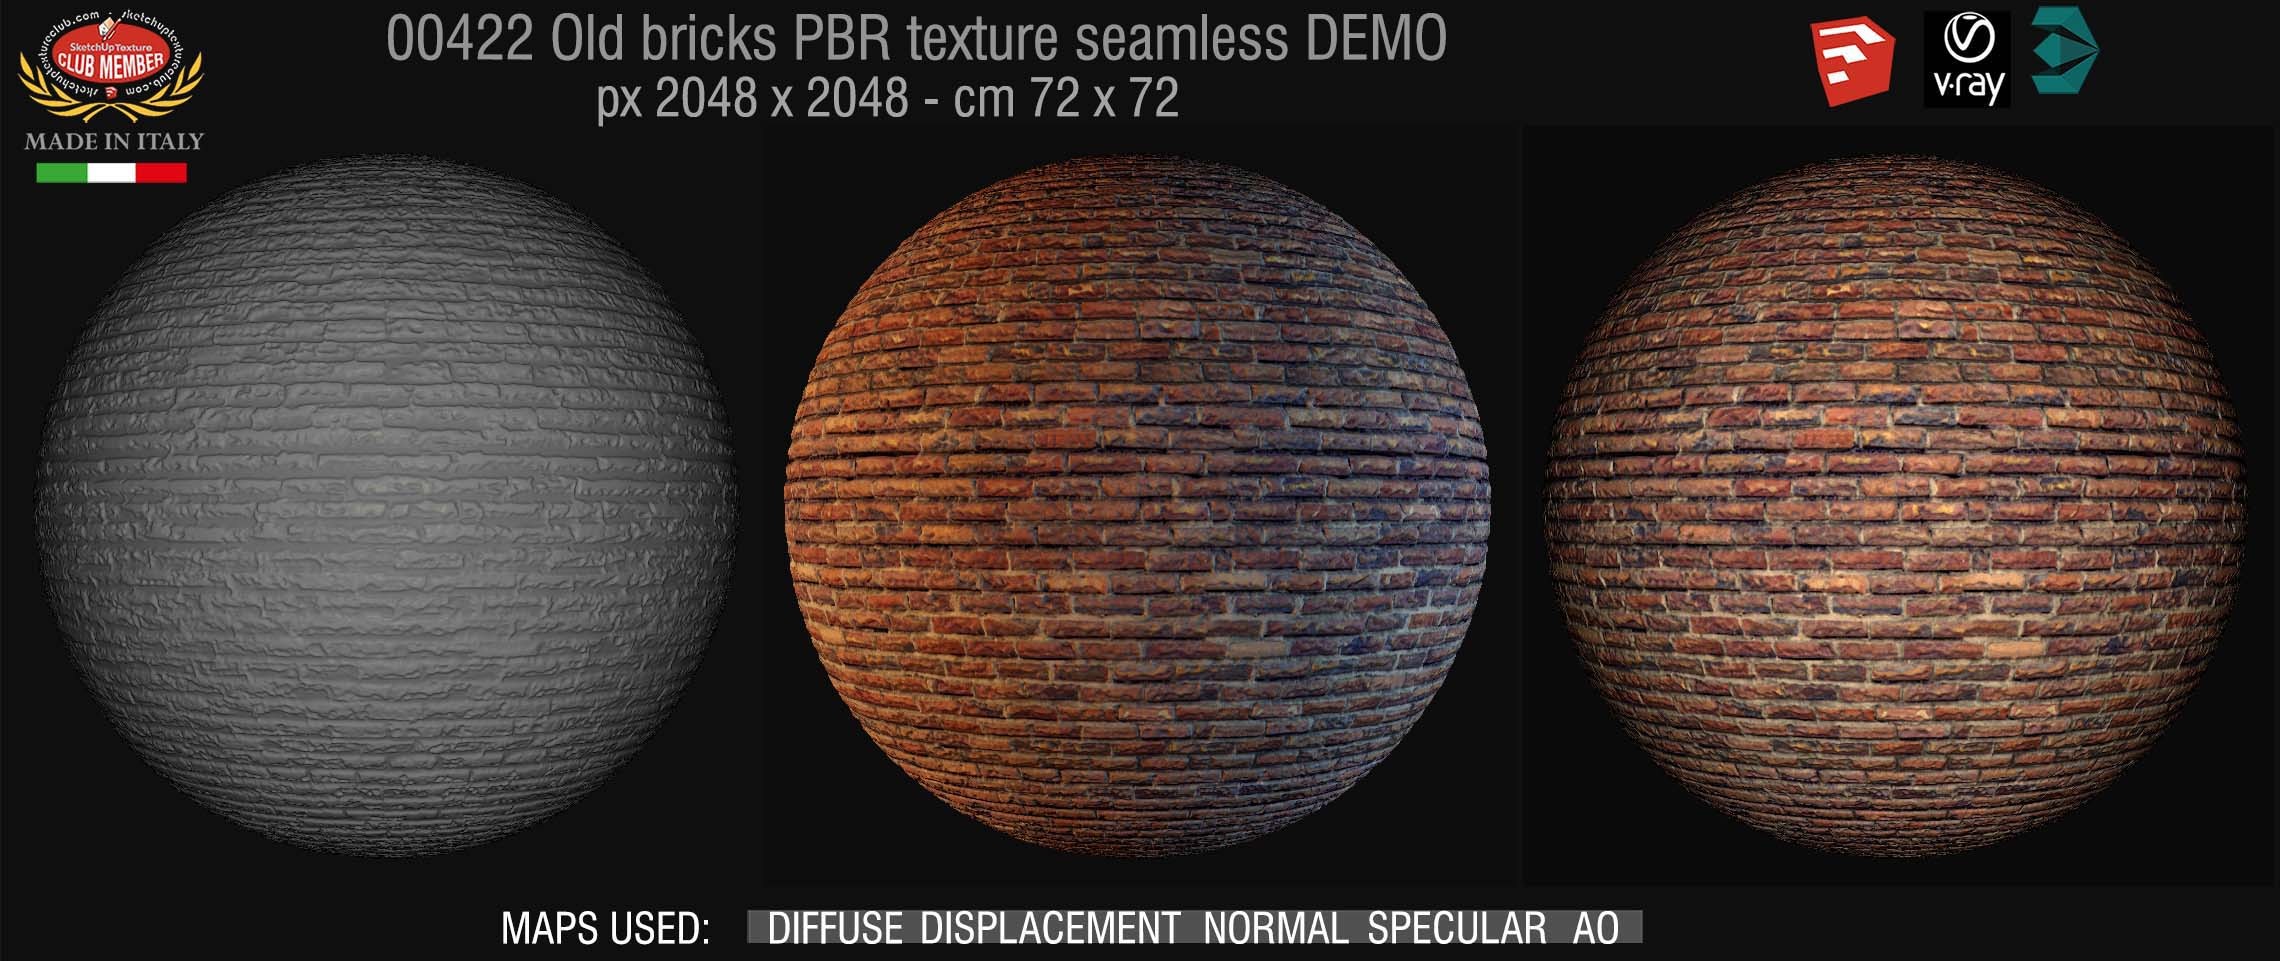 00422 Old bricks PBR texture seamless DEMO